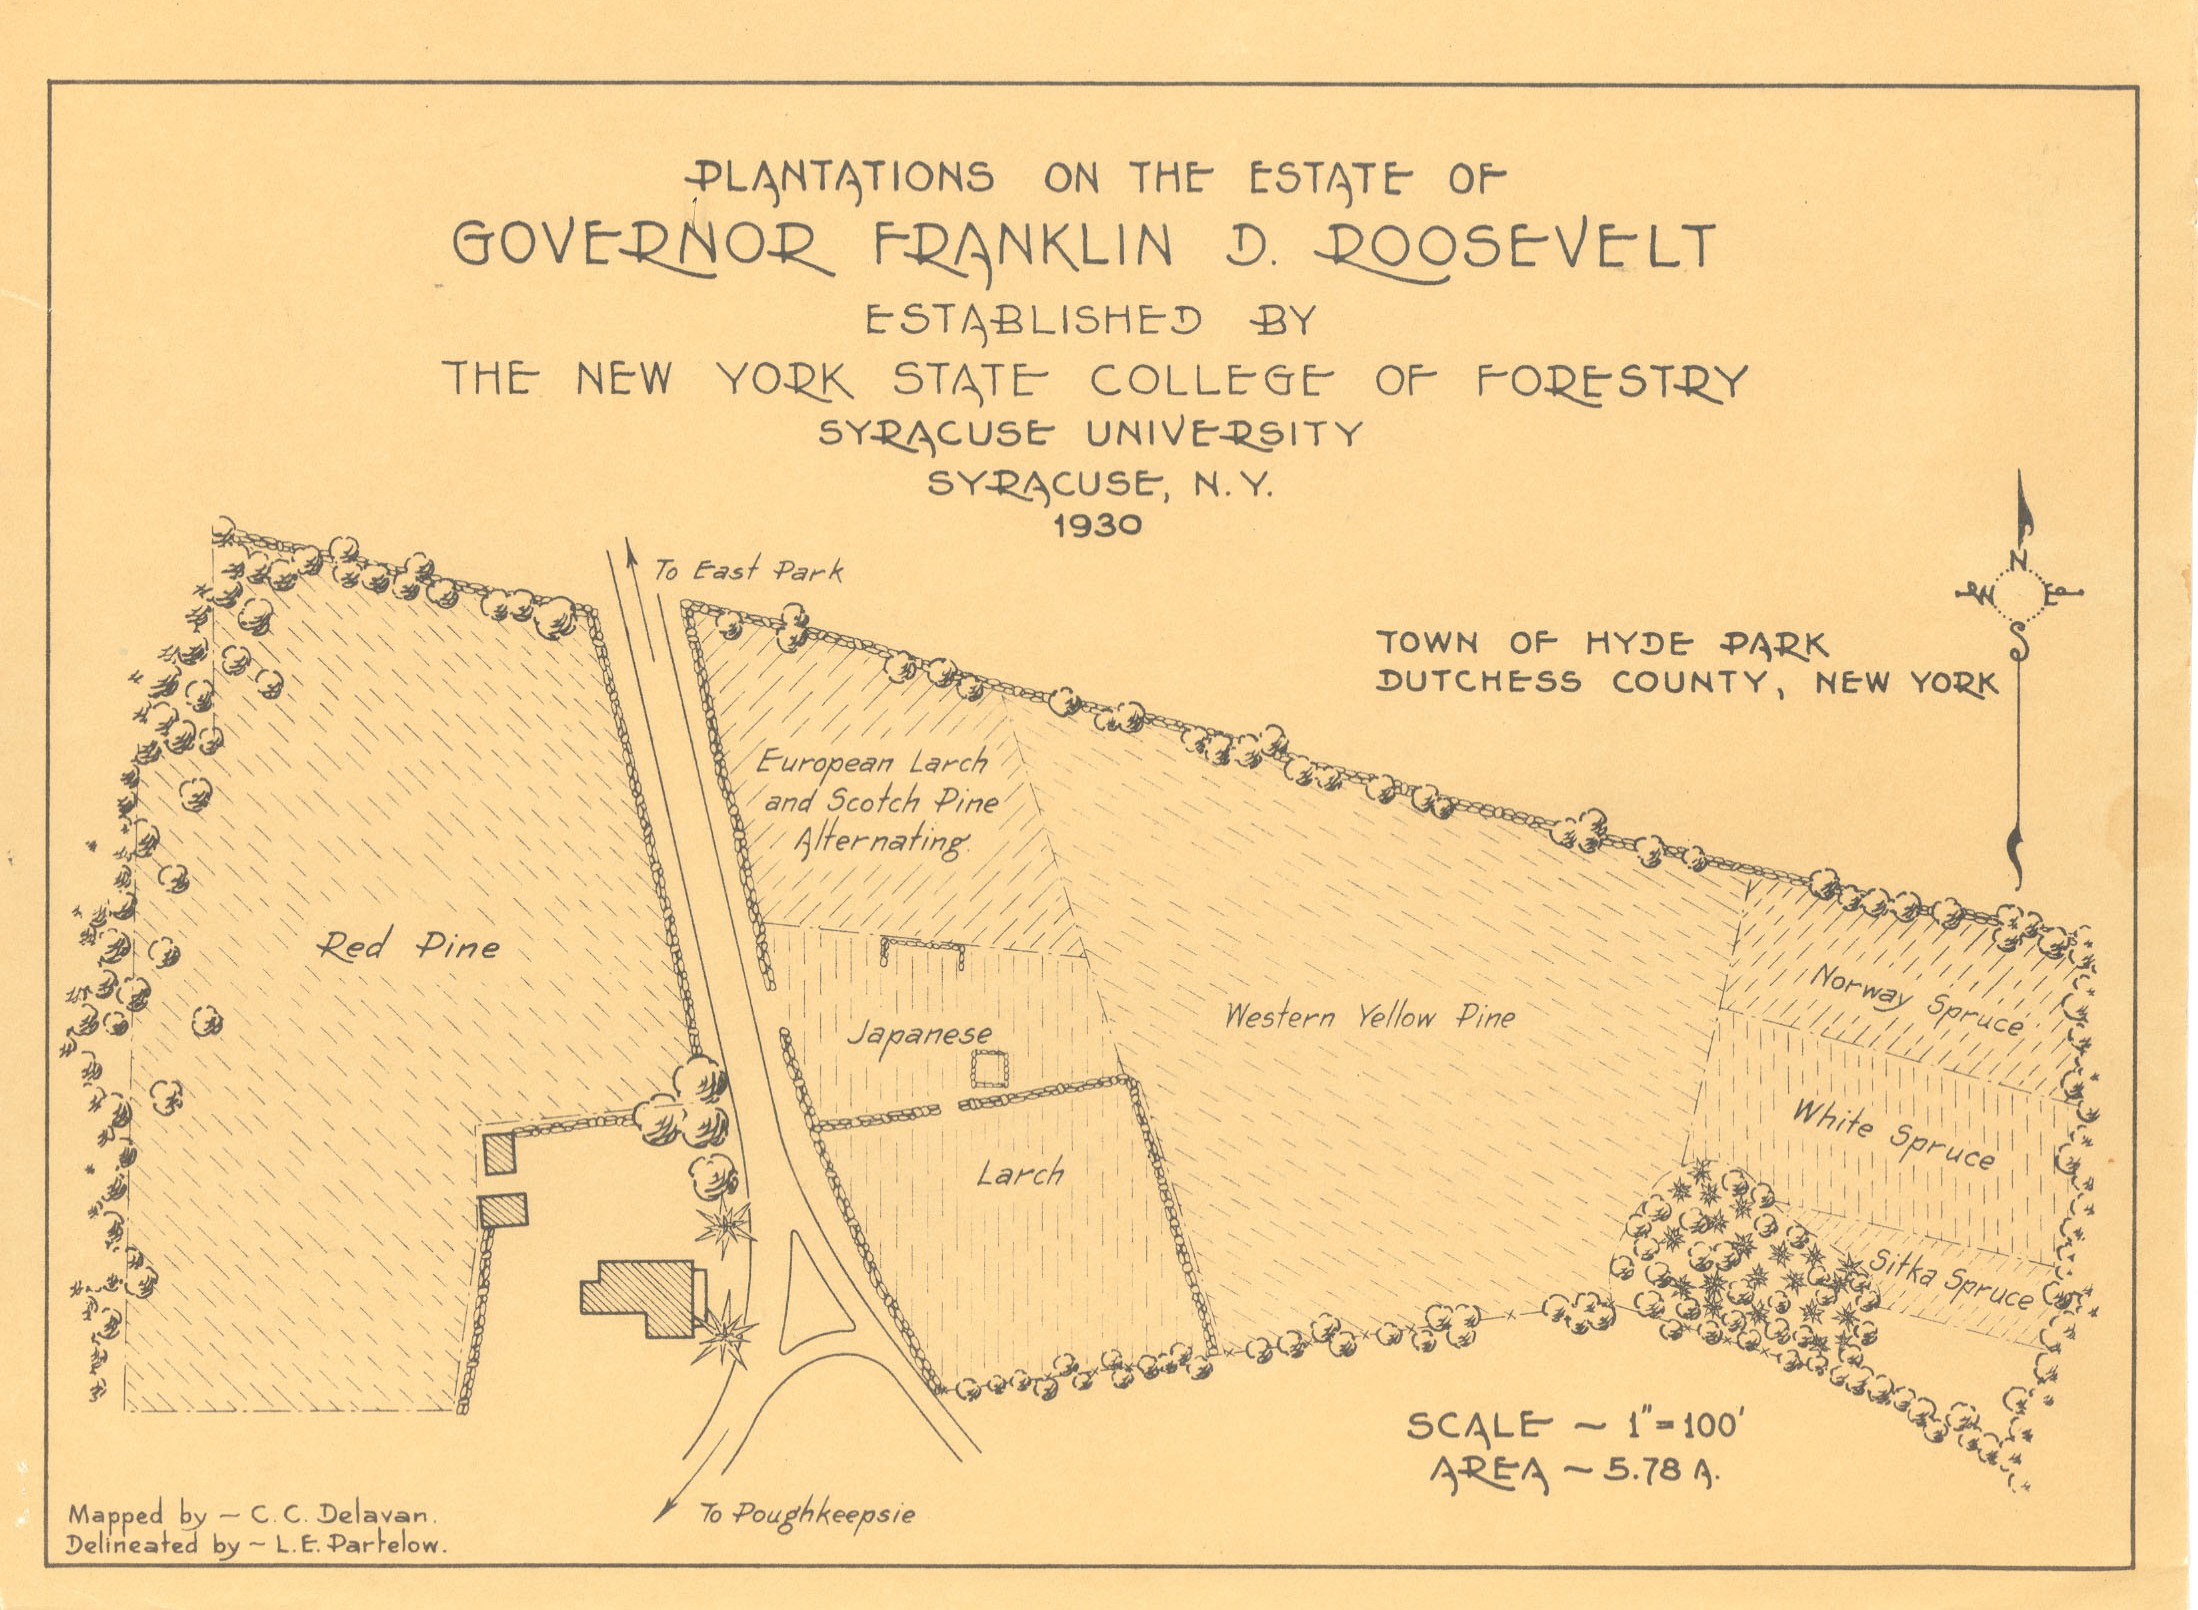 A map depicting tree plantations